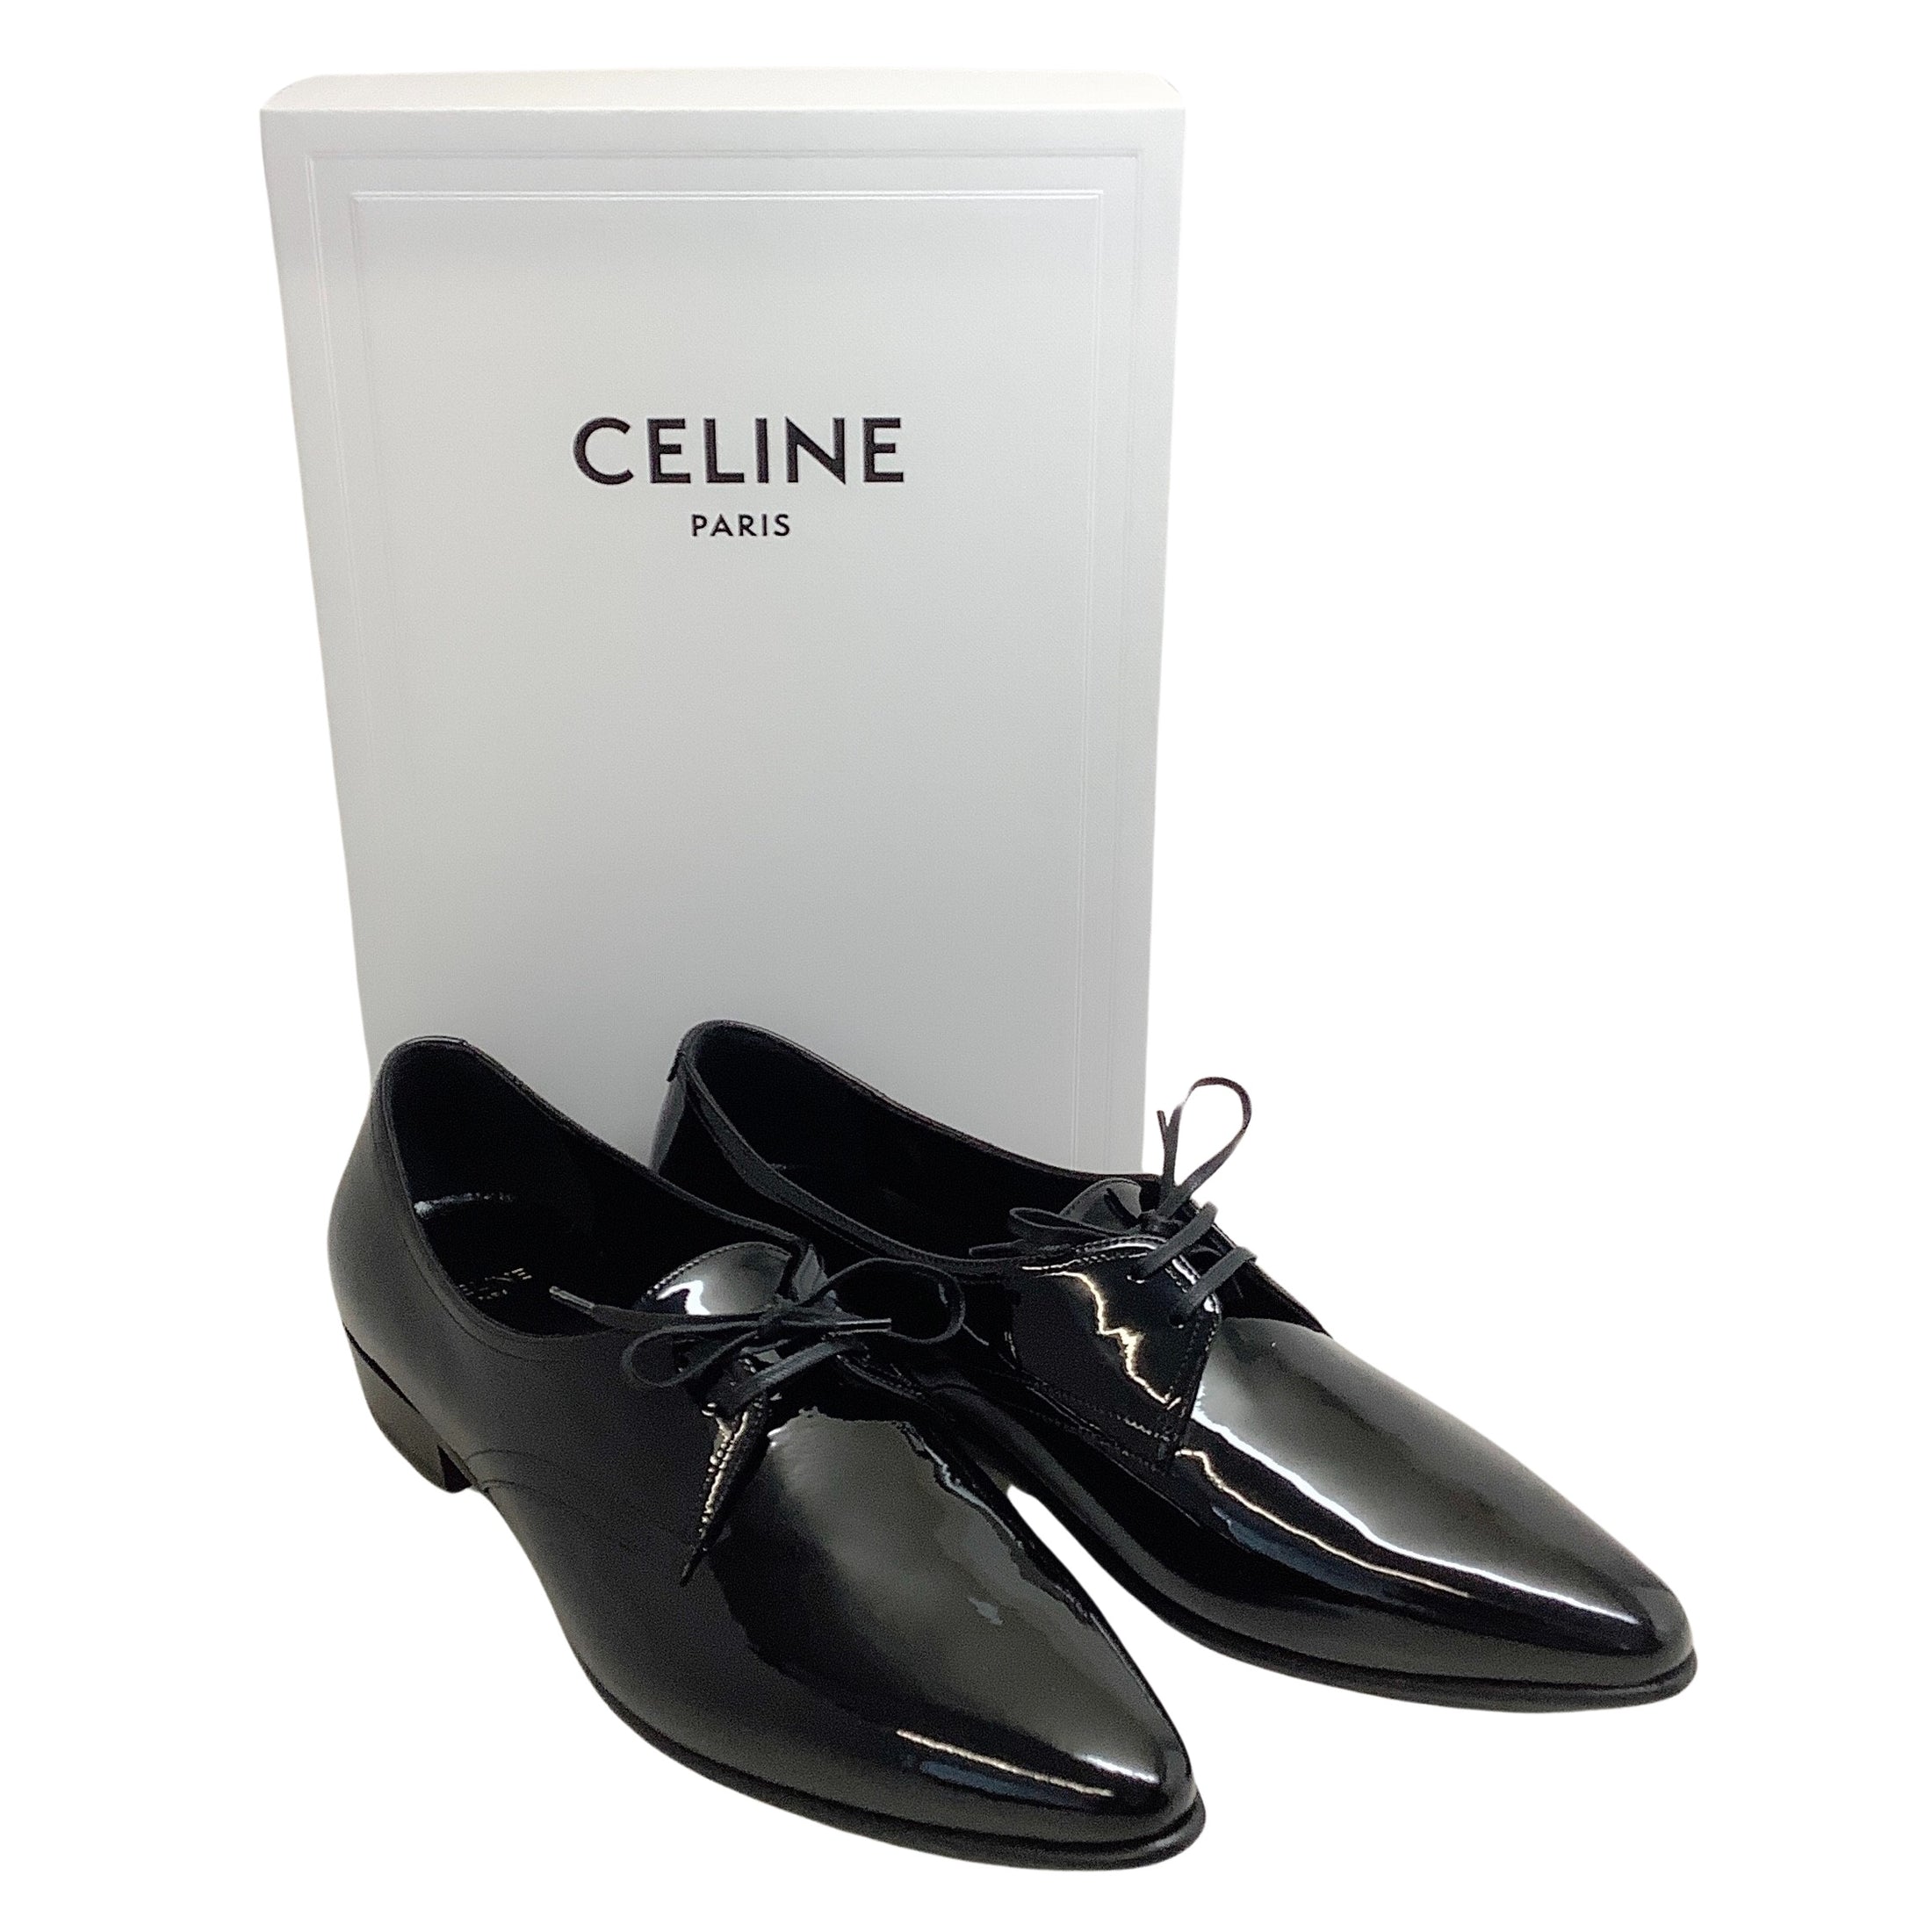 Celine Black Patent Leather Derby 30 Lace Up Oxfords